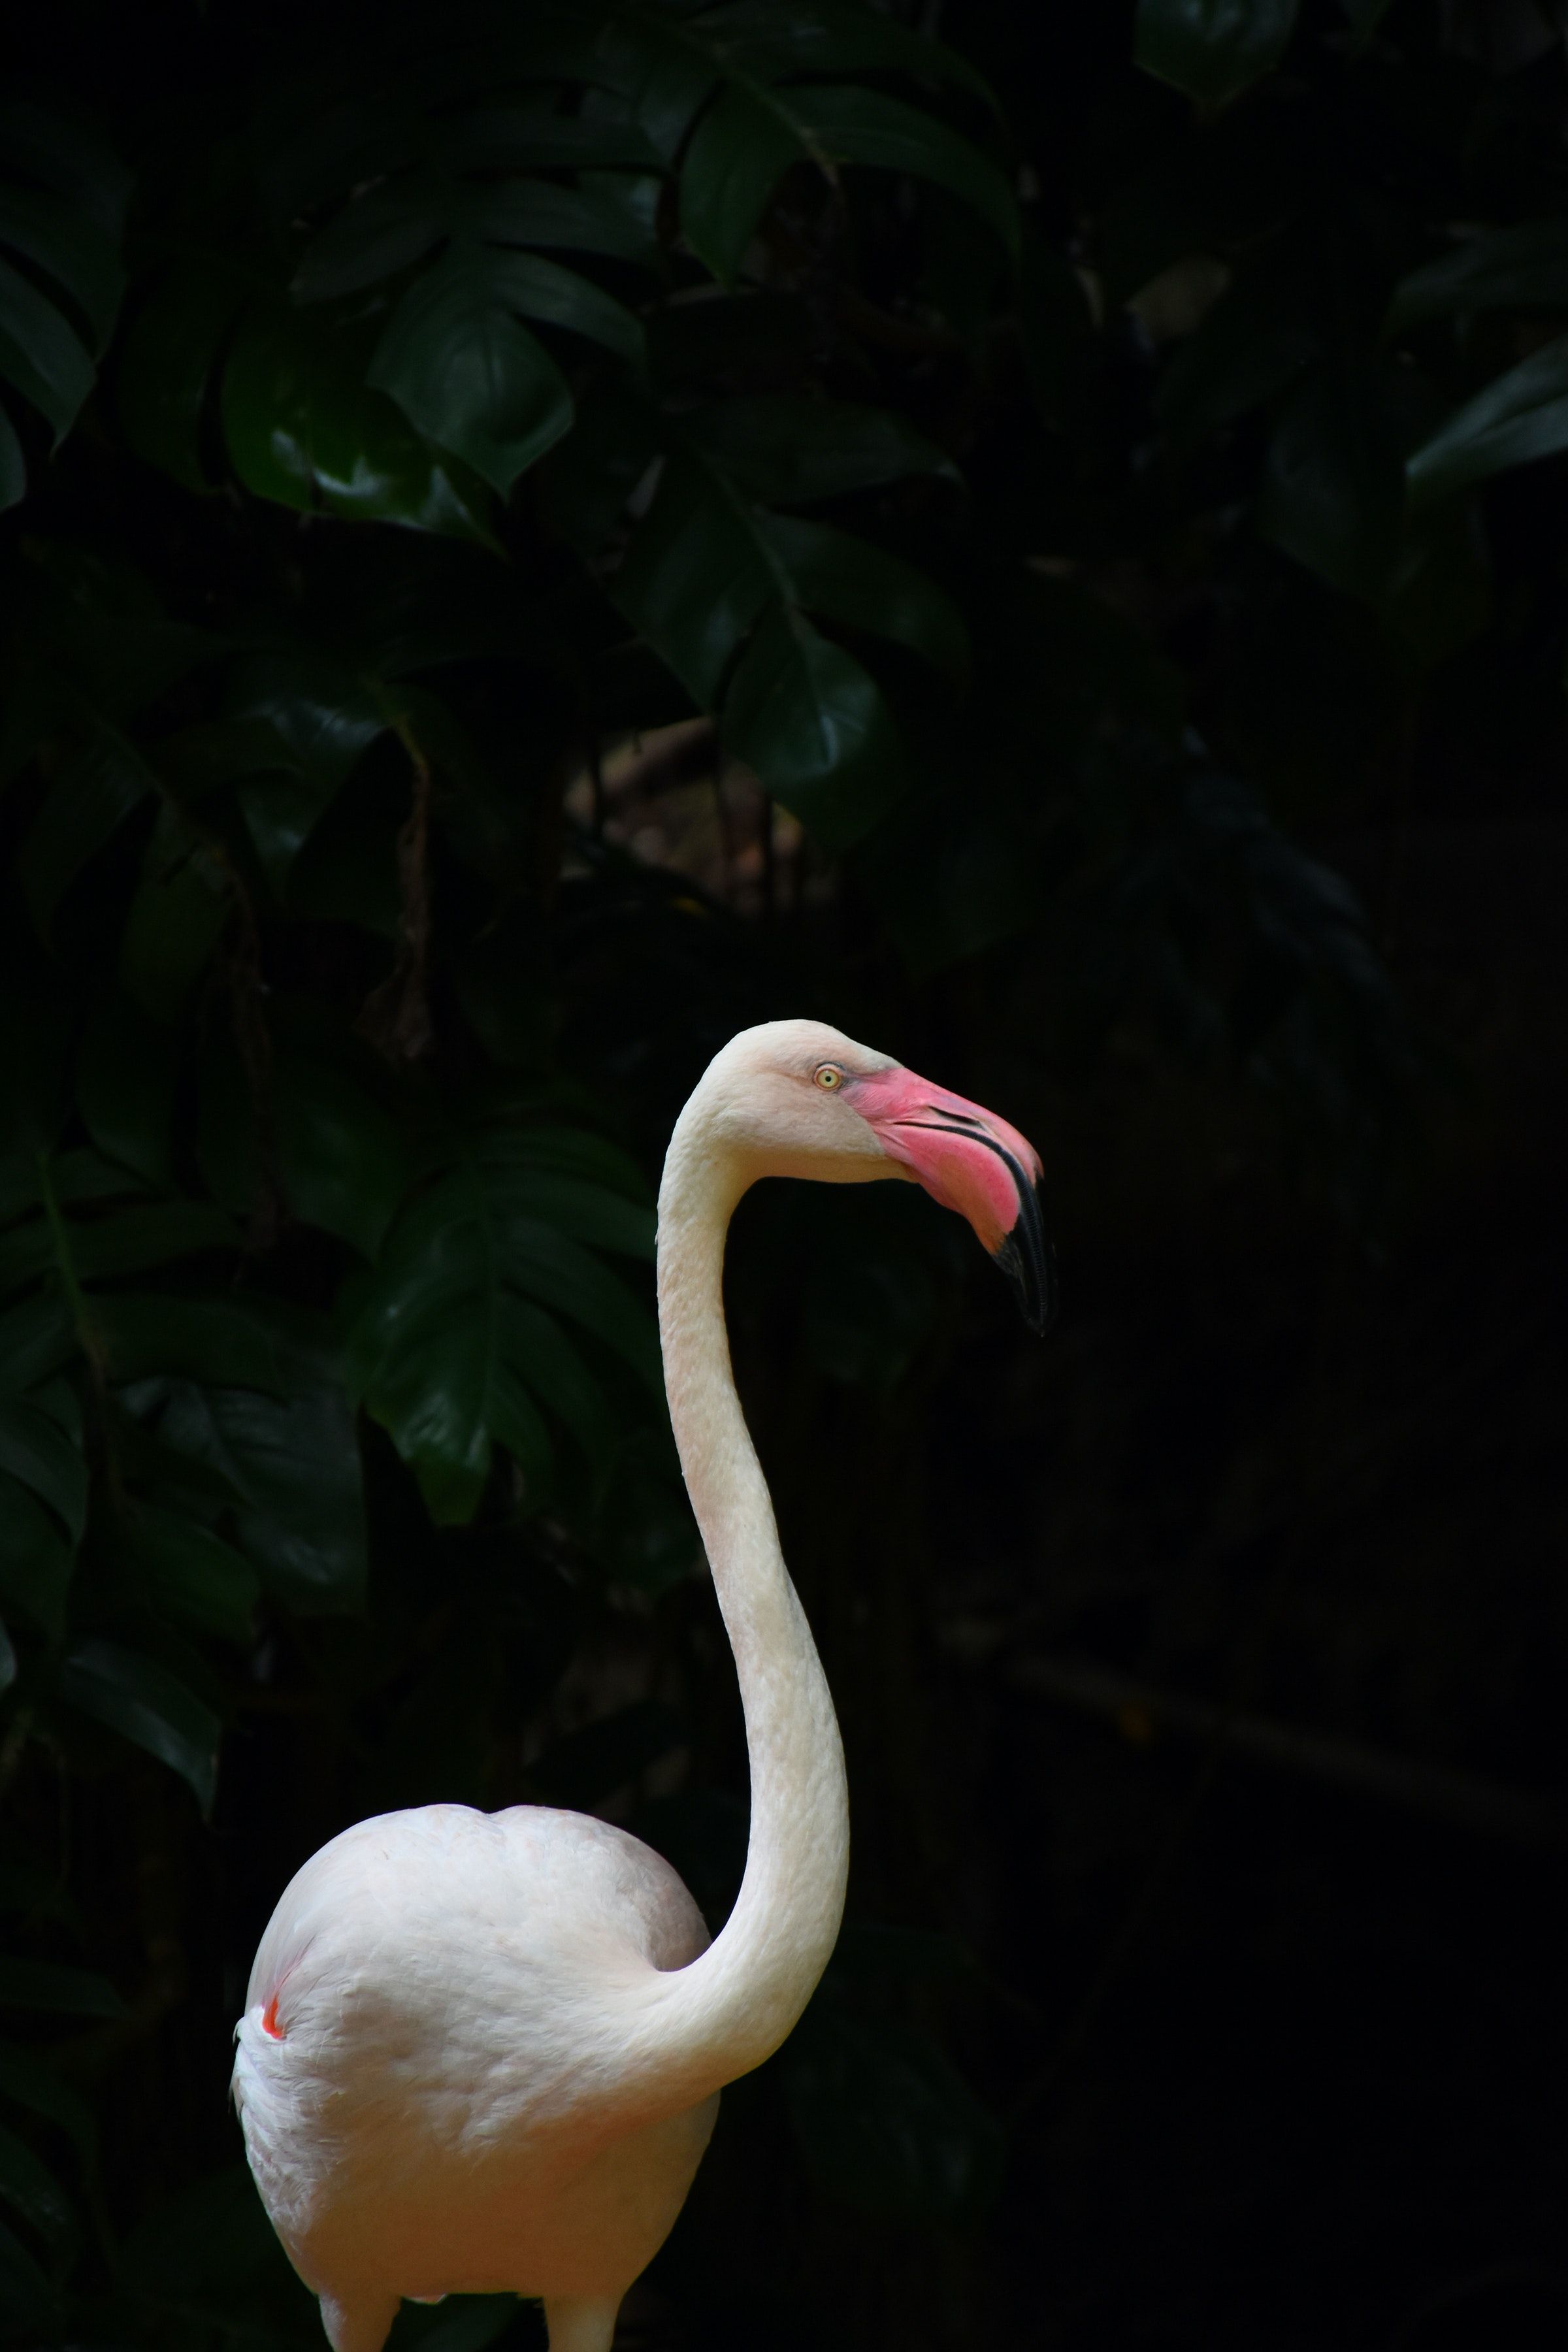  Flamingo Hintergrundbild 2400x3600. Flamingo Bilder Und Fotos · Kostenlos Downloaden · Stock Fotos